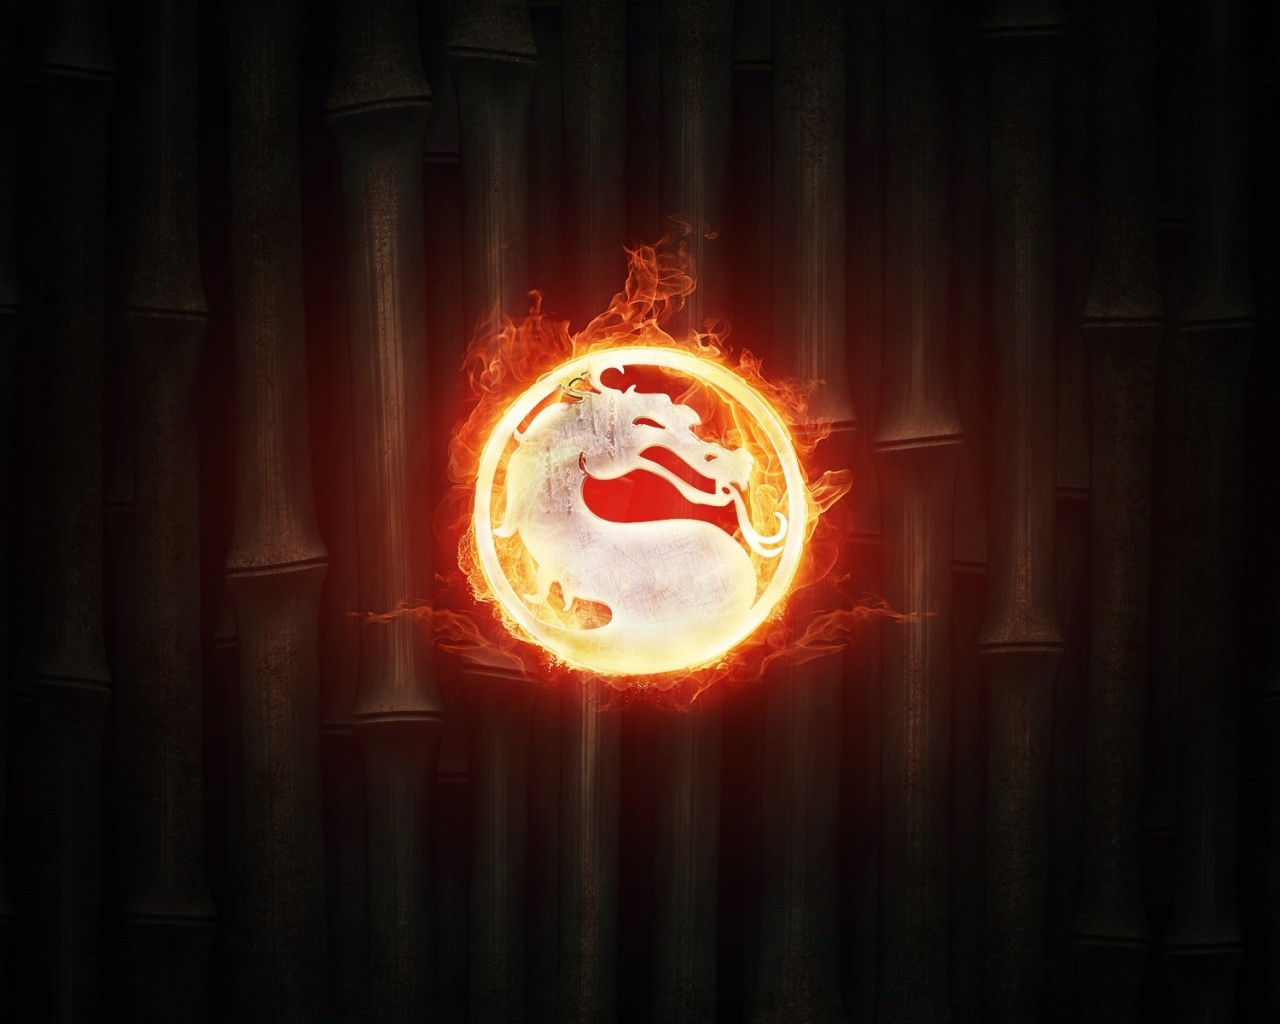 Mortal Kombat Fire for 1280 x 1024 resolution